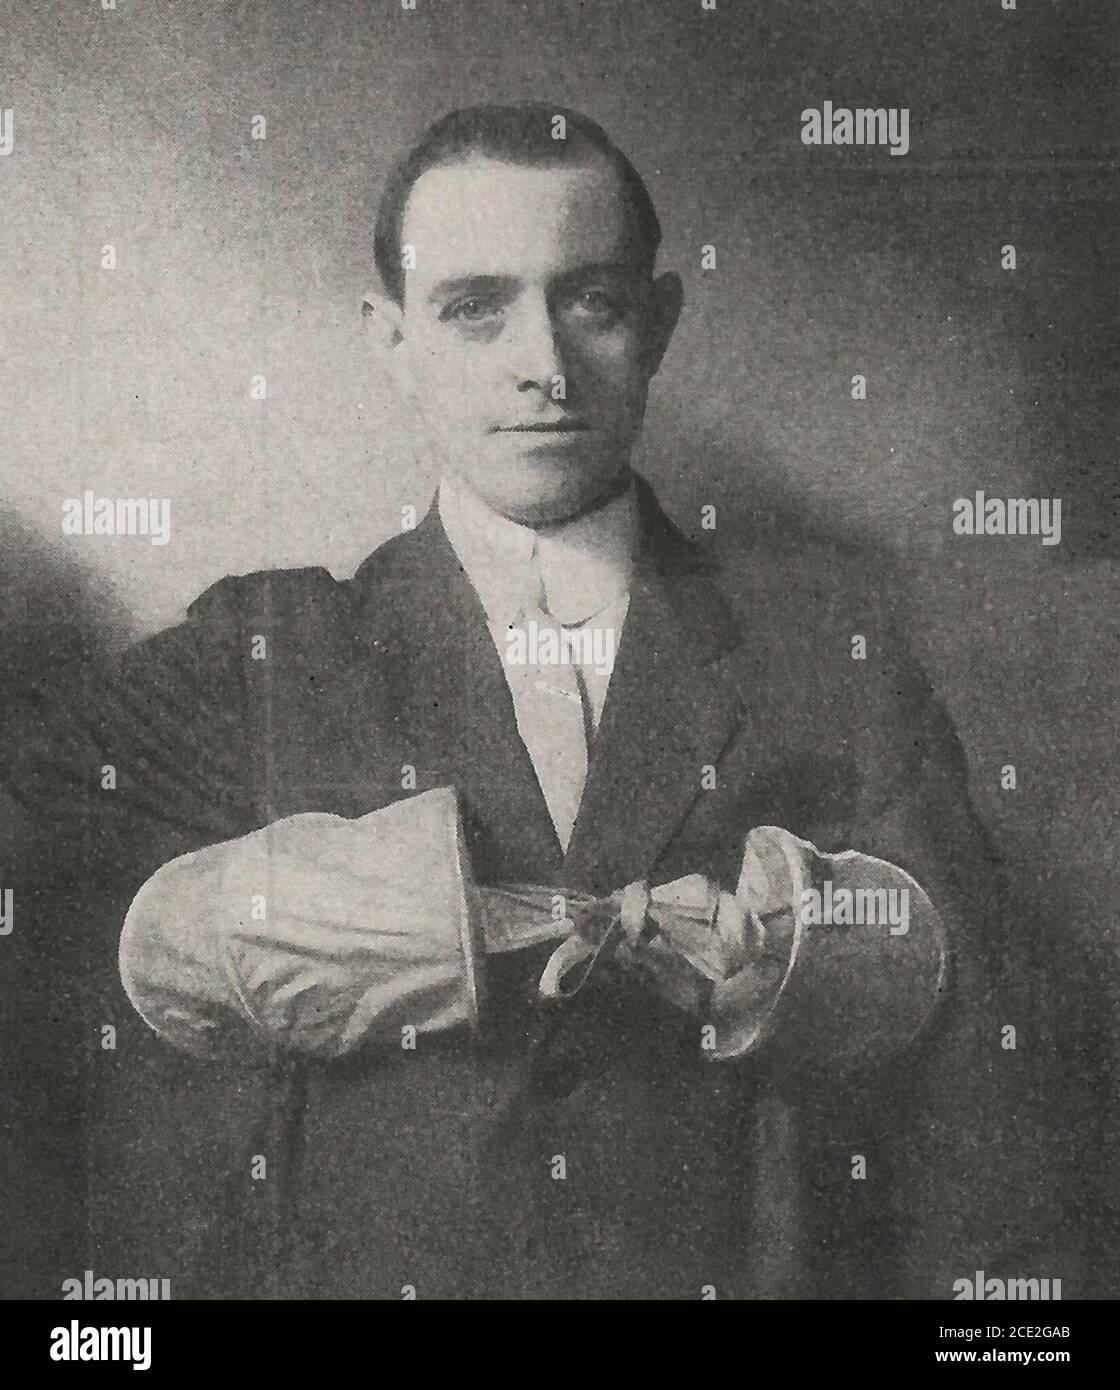 Demonstrating a life jacket, circa 1920 Stock Photo